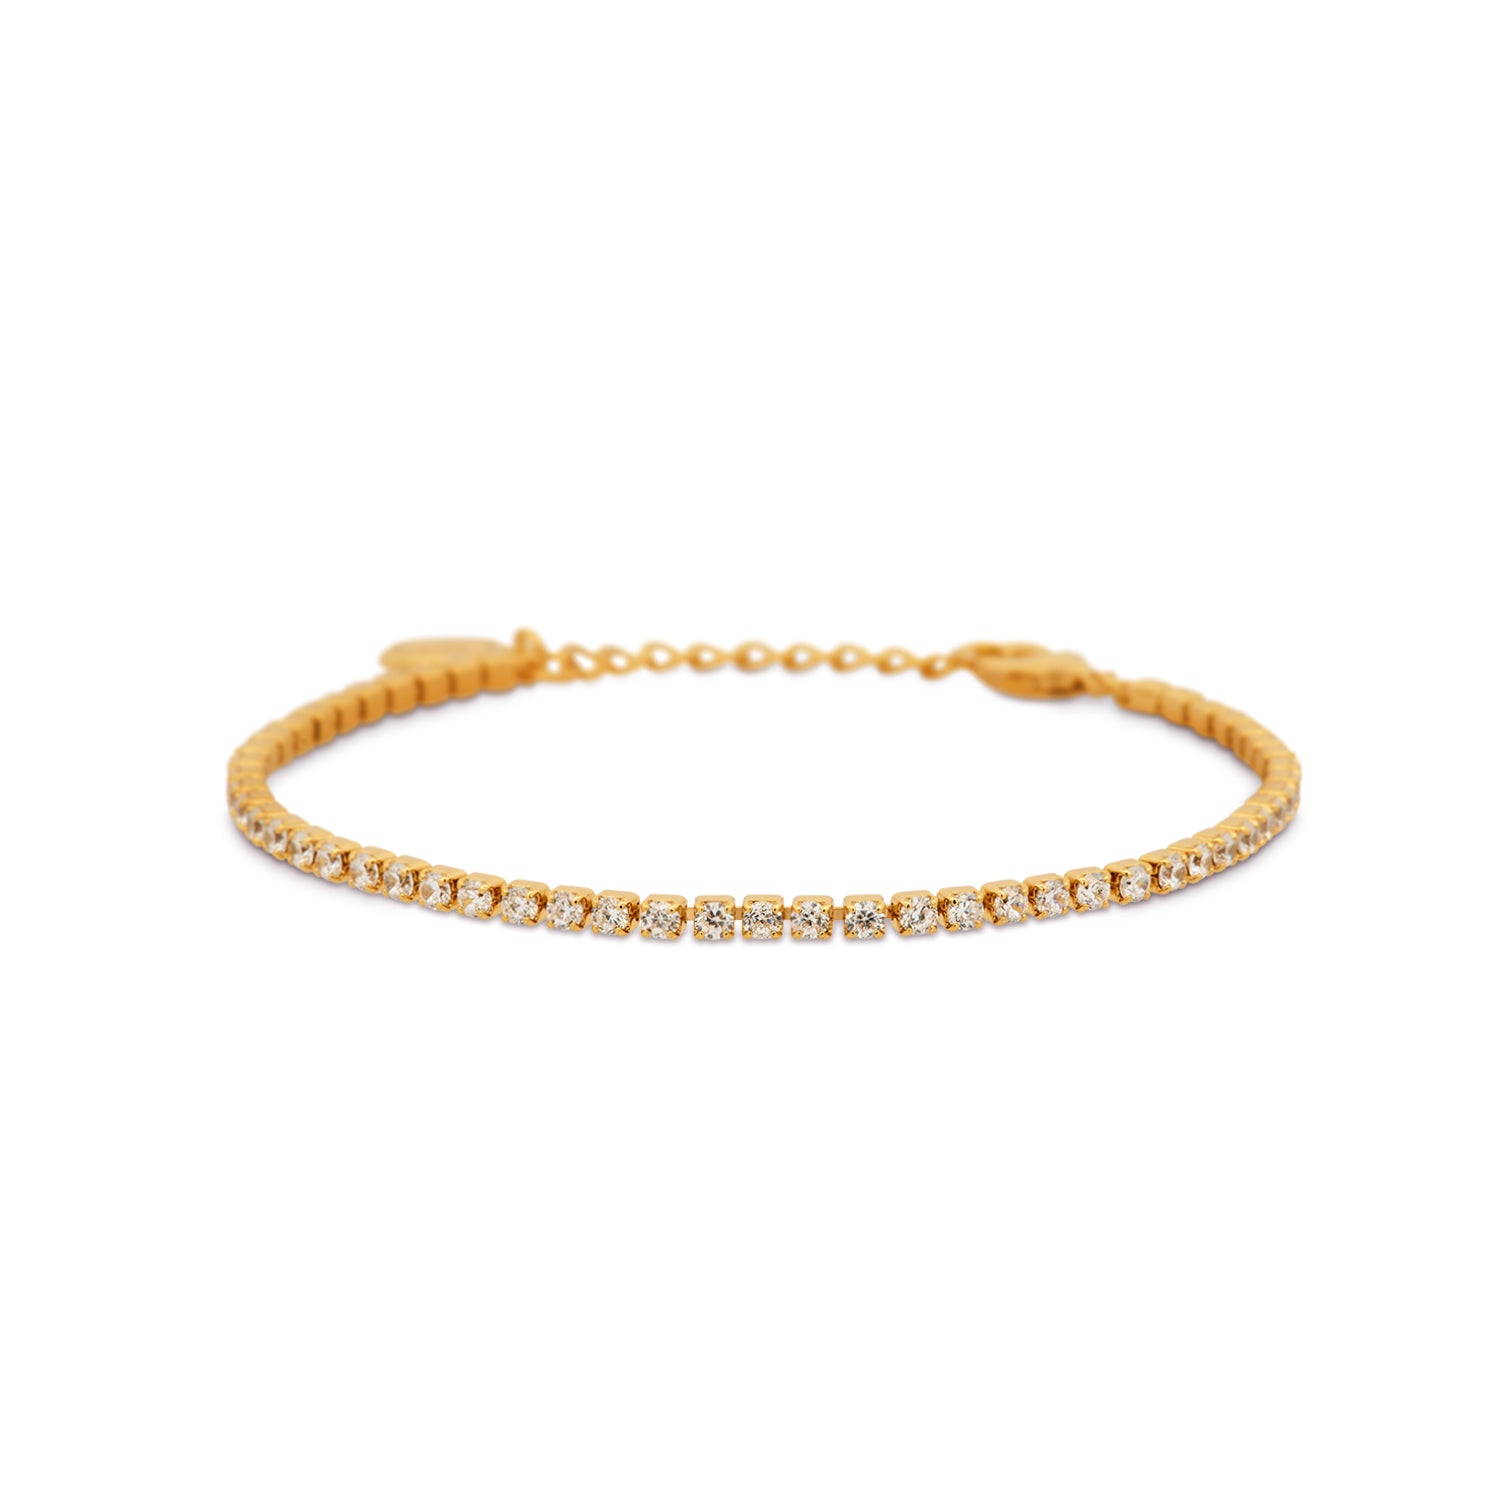 Elegant and bold bracelet. Gold tennis bracelet set with cubic zirconia stones.